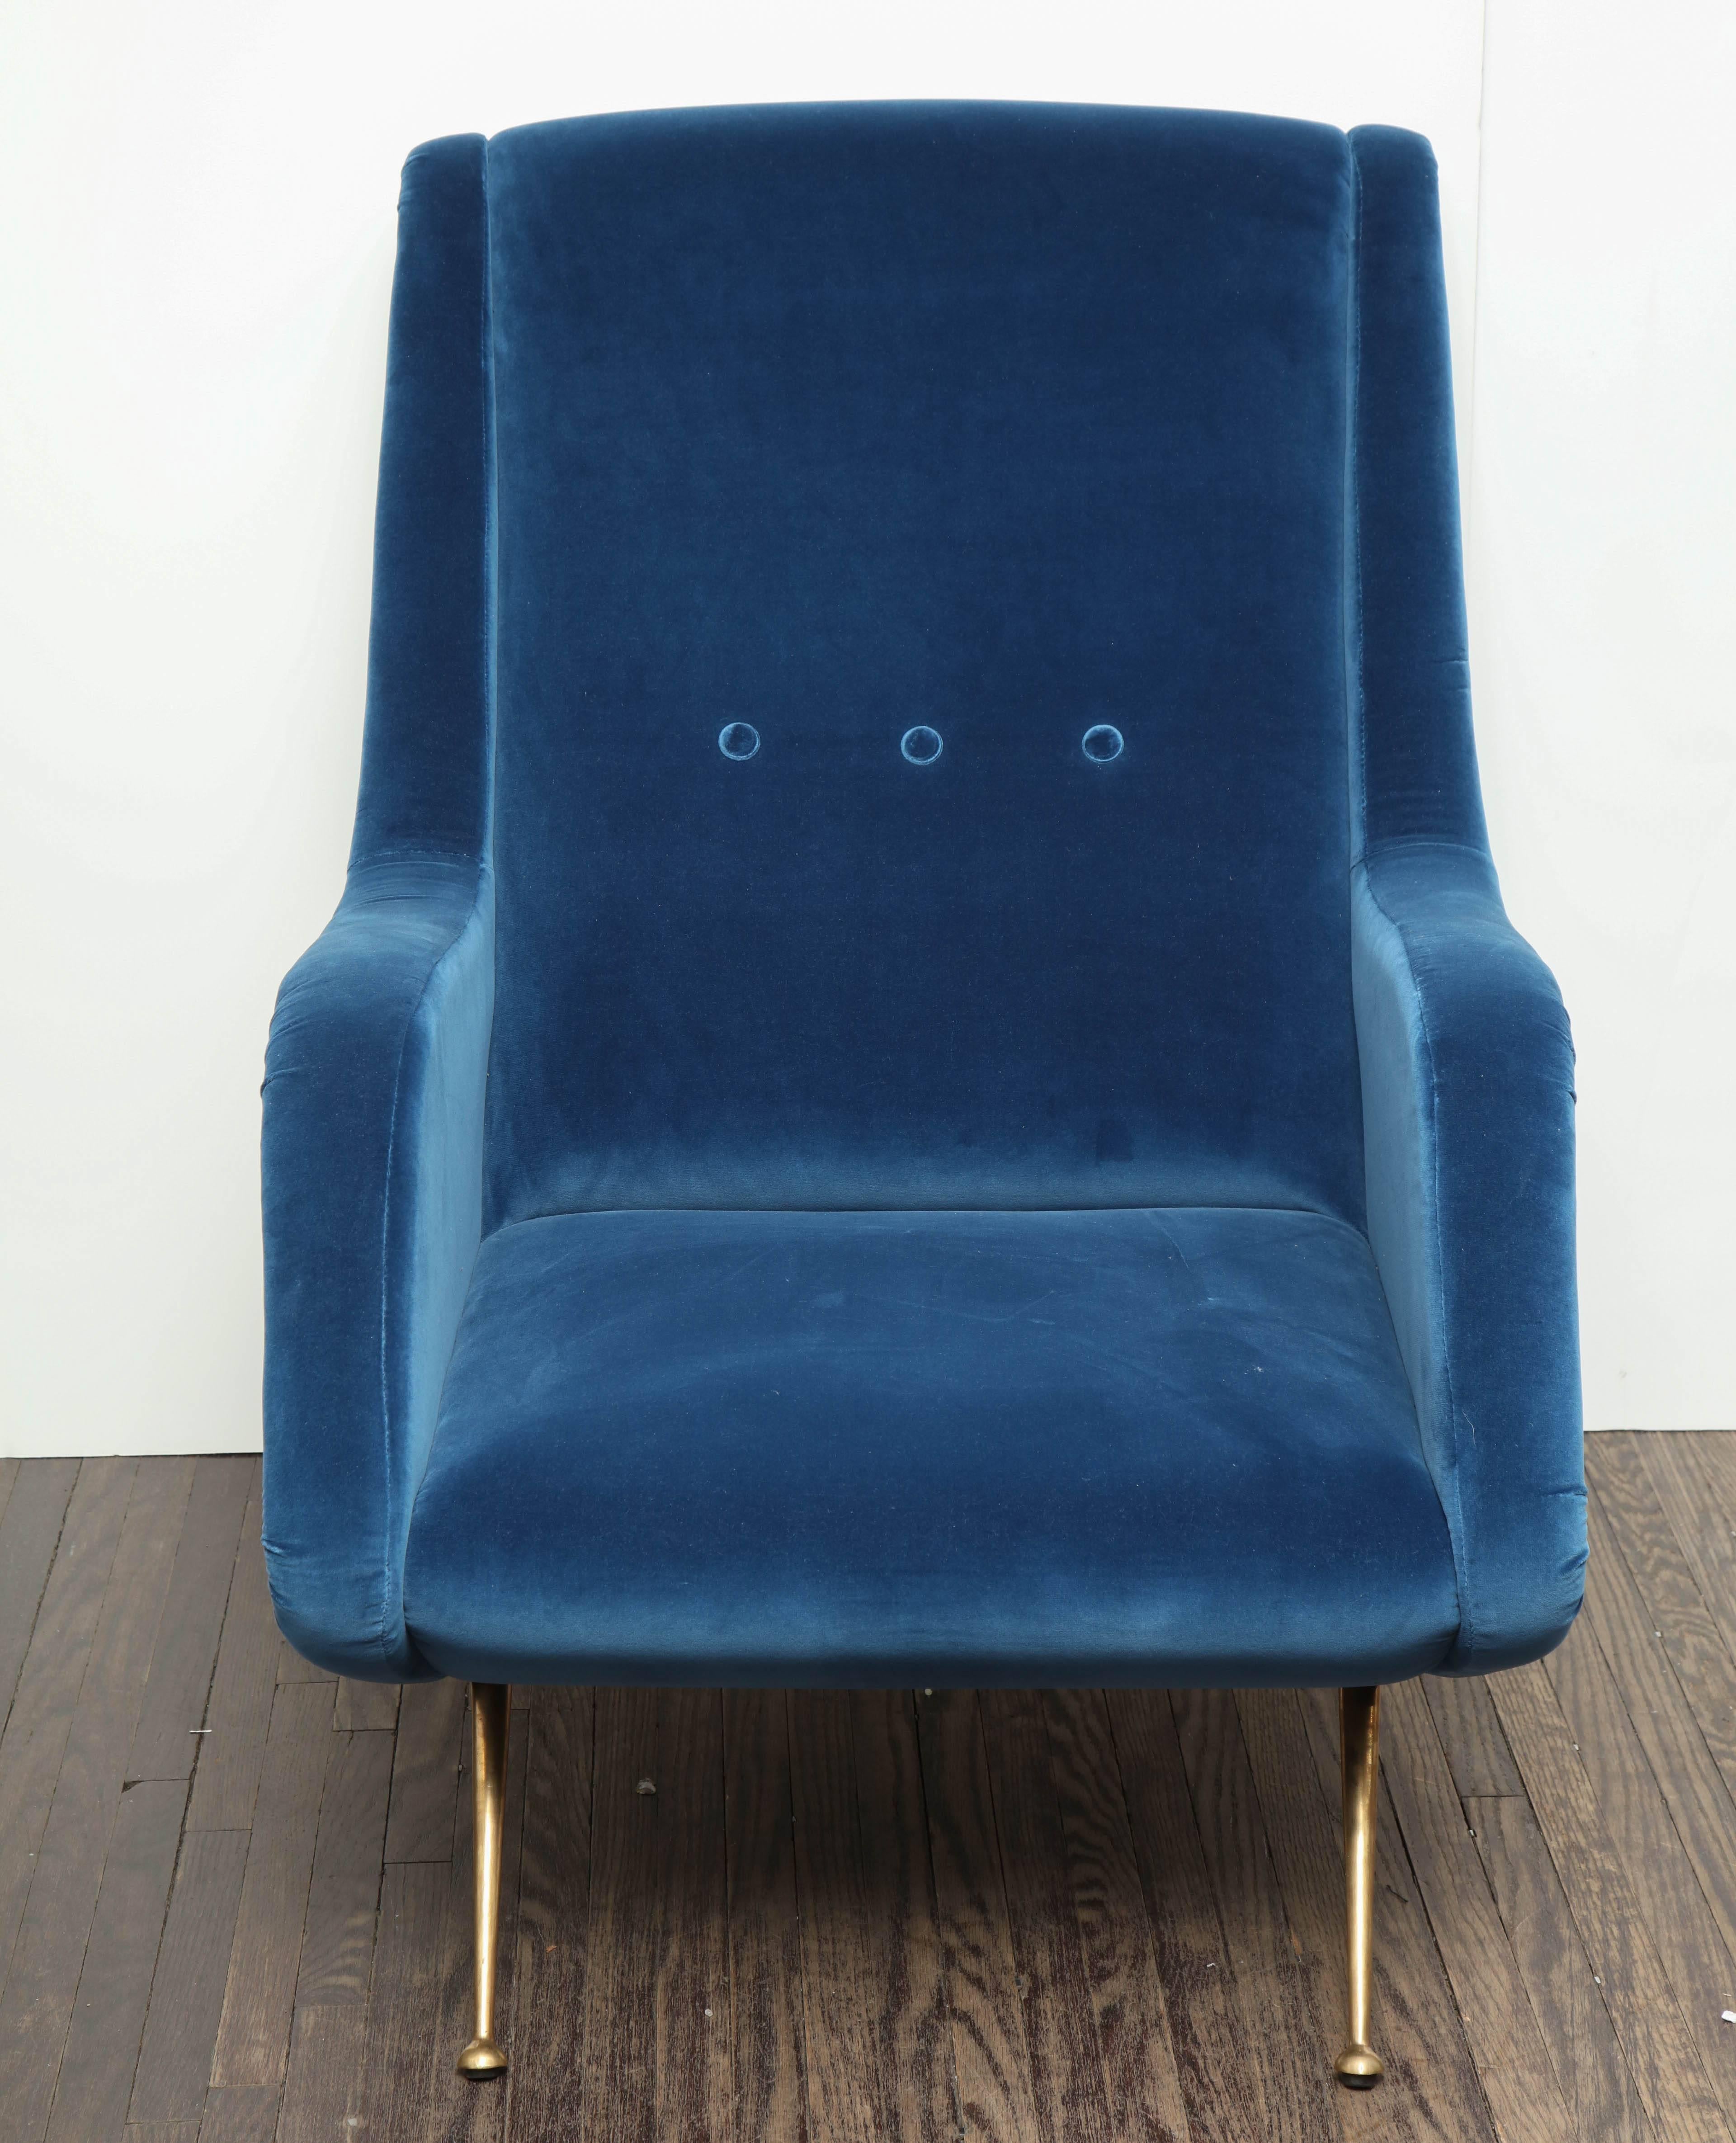 Pair of Parisi Vintage Italian Club Chairs Upholstered in Teal Blue Velvet 1